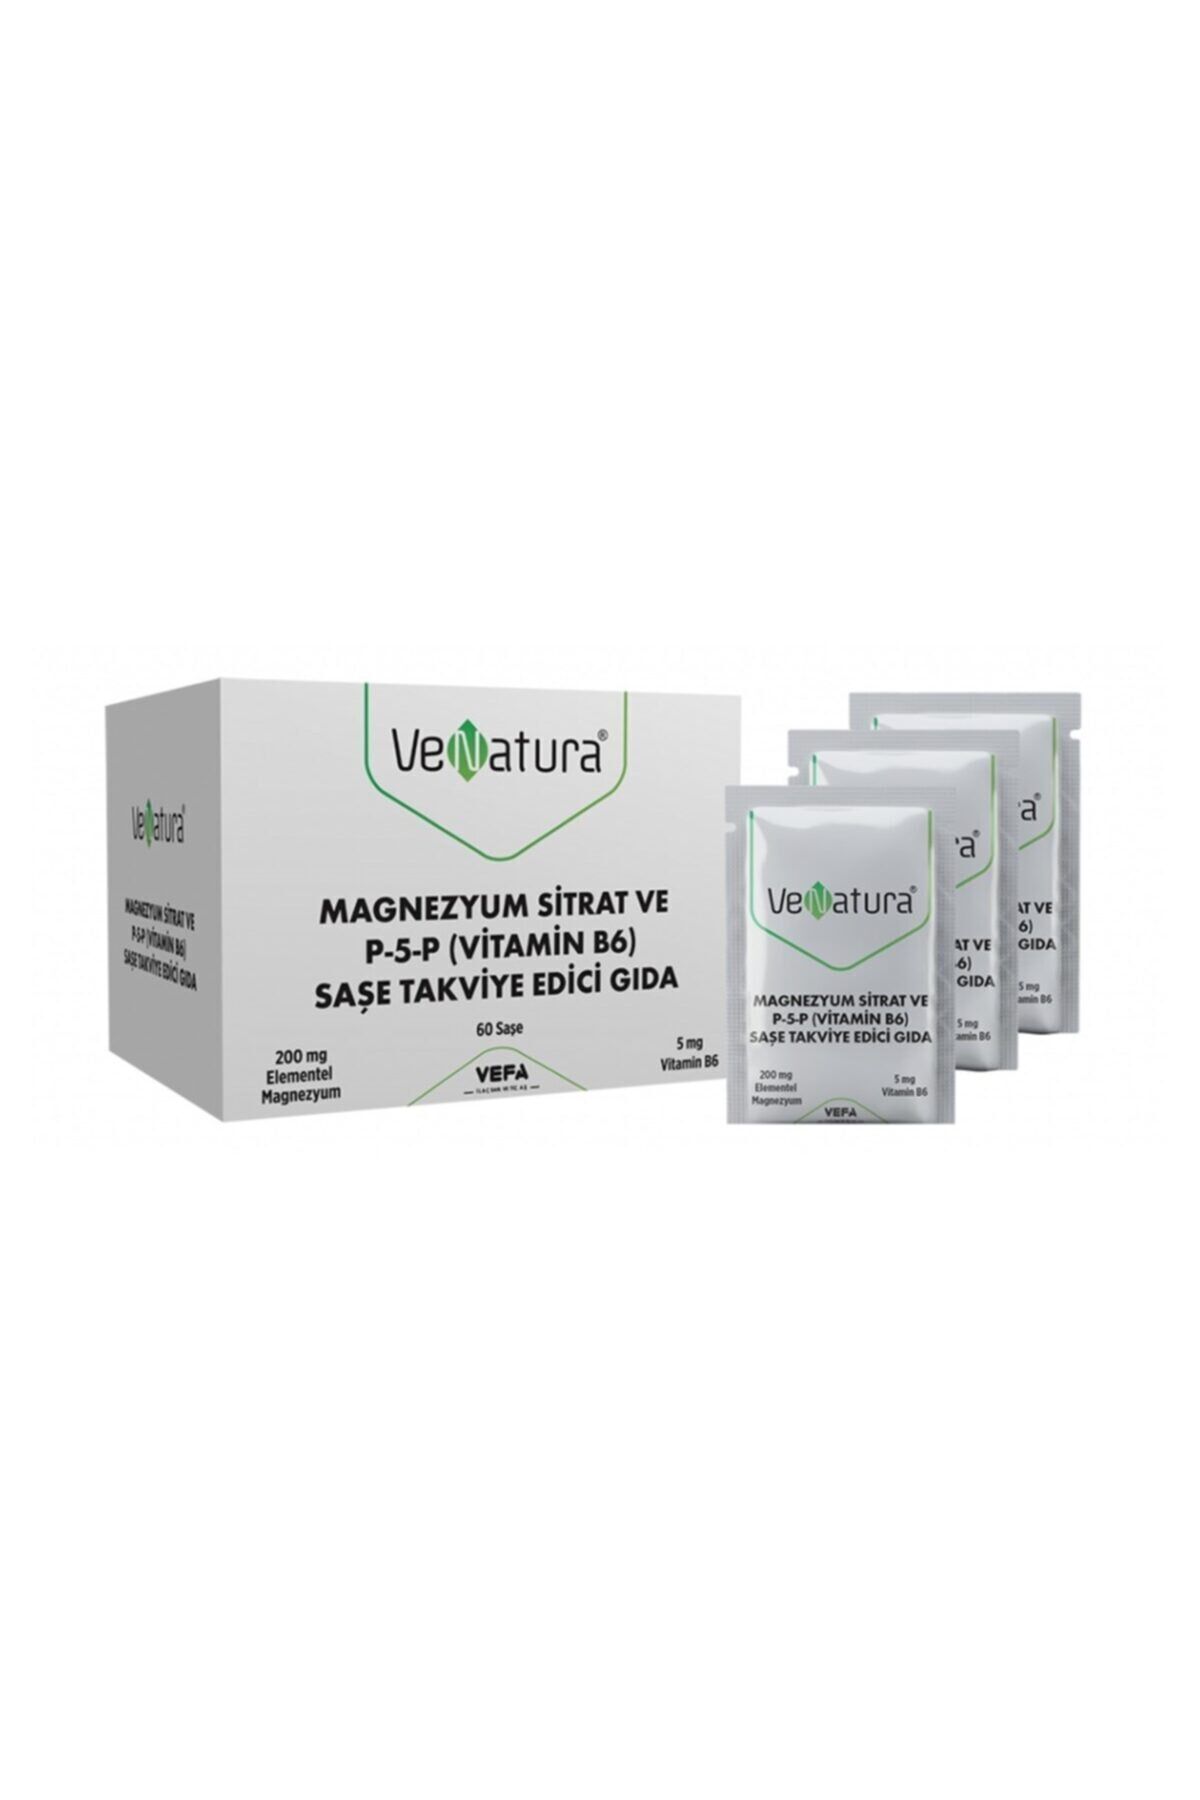 Venatura Magnezyum Sitrat Ve P-5-P (Vitamin B6) 60 Saşe